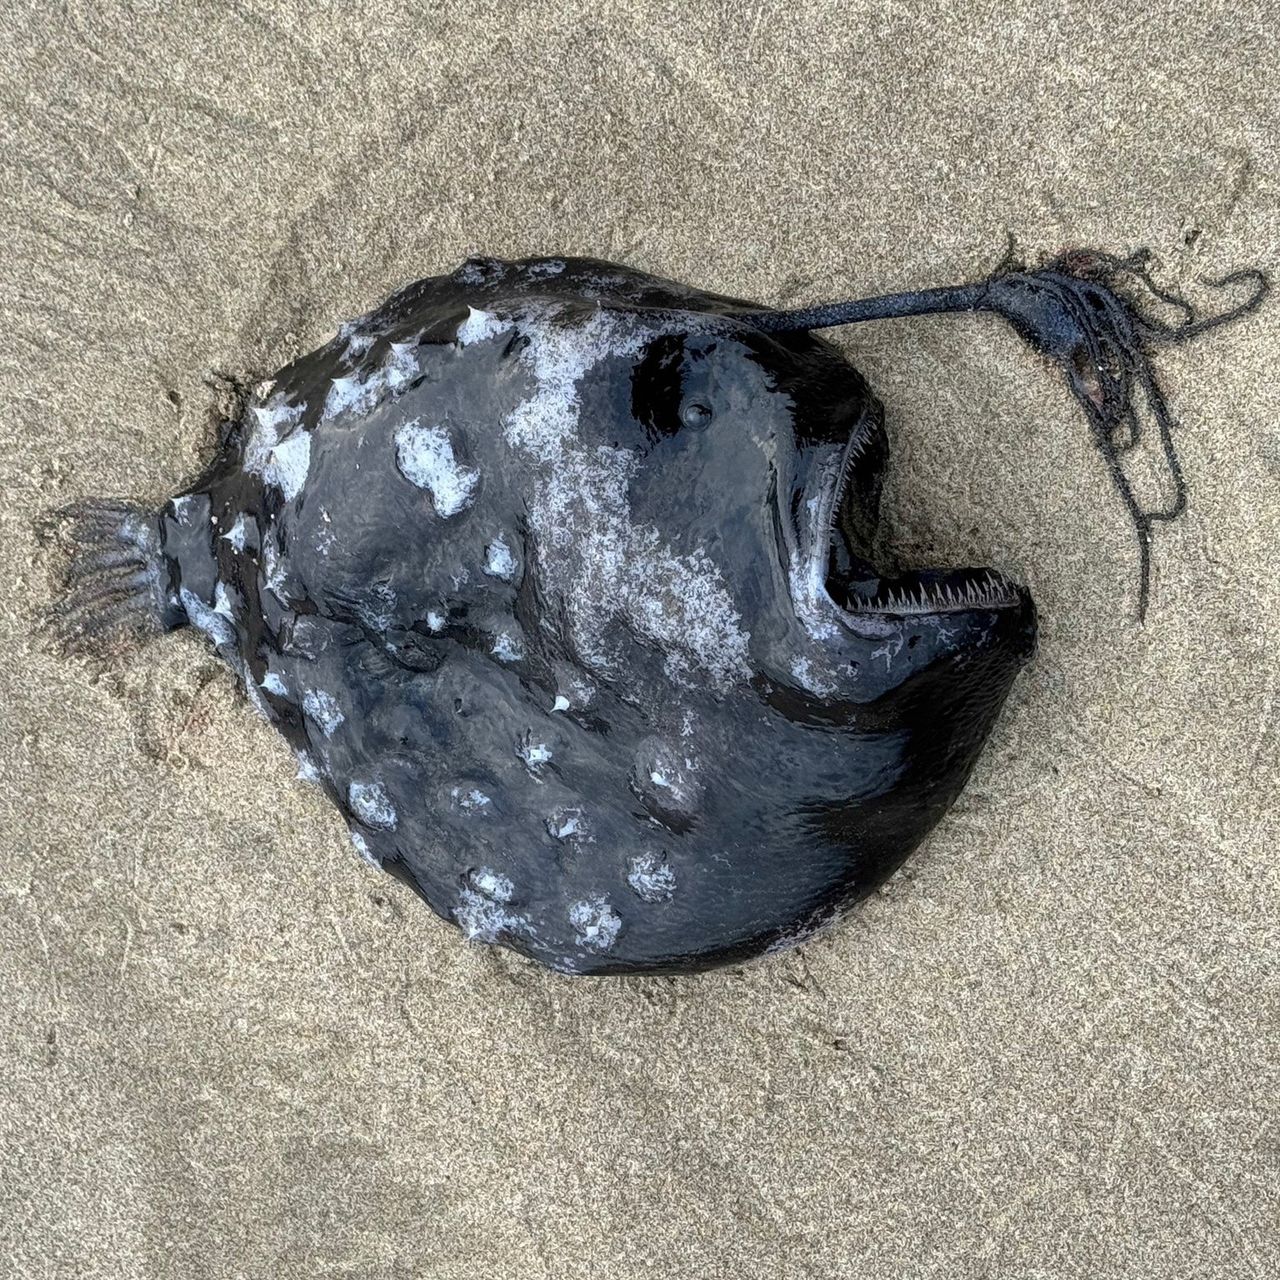 Rare deep-sea anglerfish washed ashore on Oregon Beach